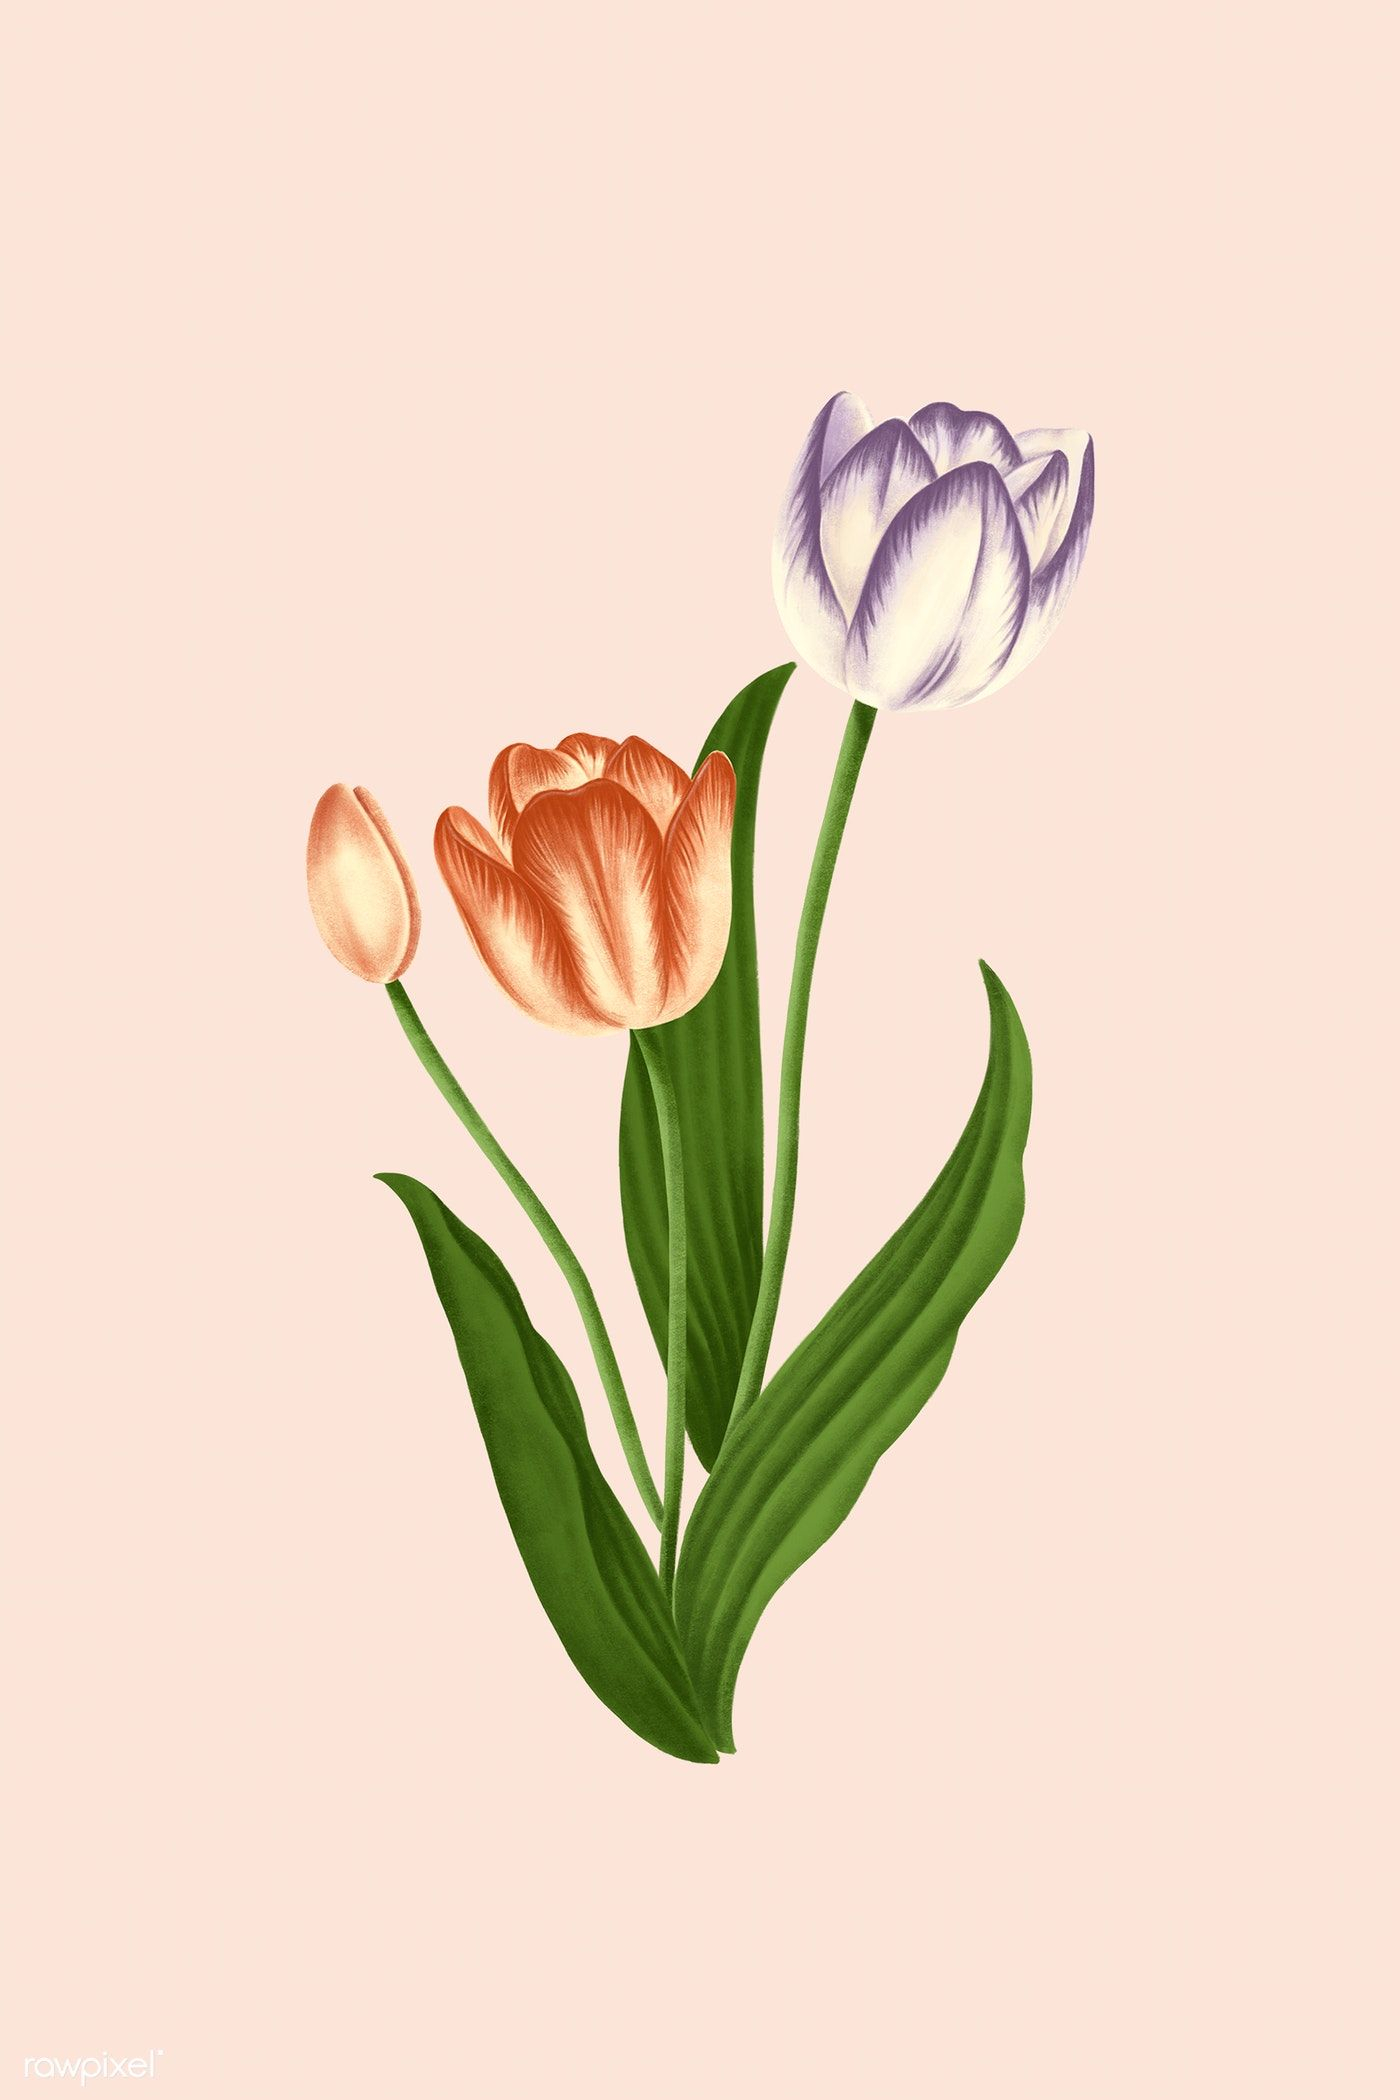 1400x2100 Vintage tulip flower mobile phone wallpaper illustration mockup | premium image by / Noon | Flower illustration, Tulips flowers, Tulips art